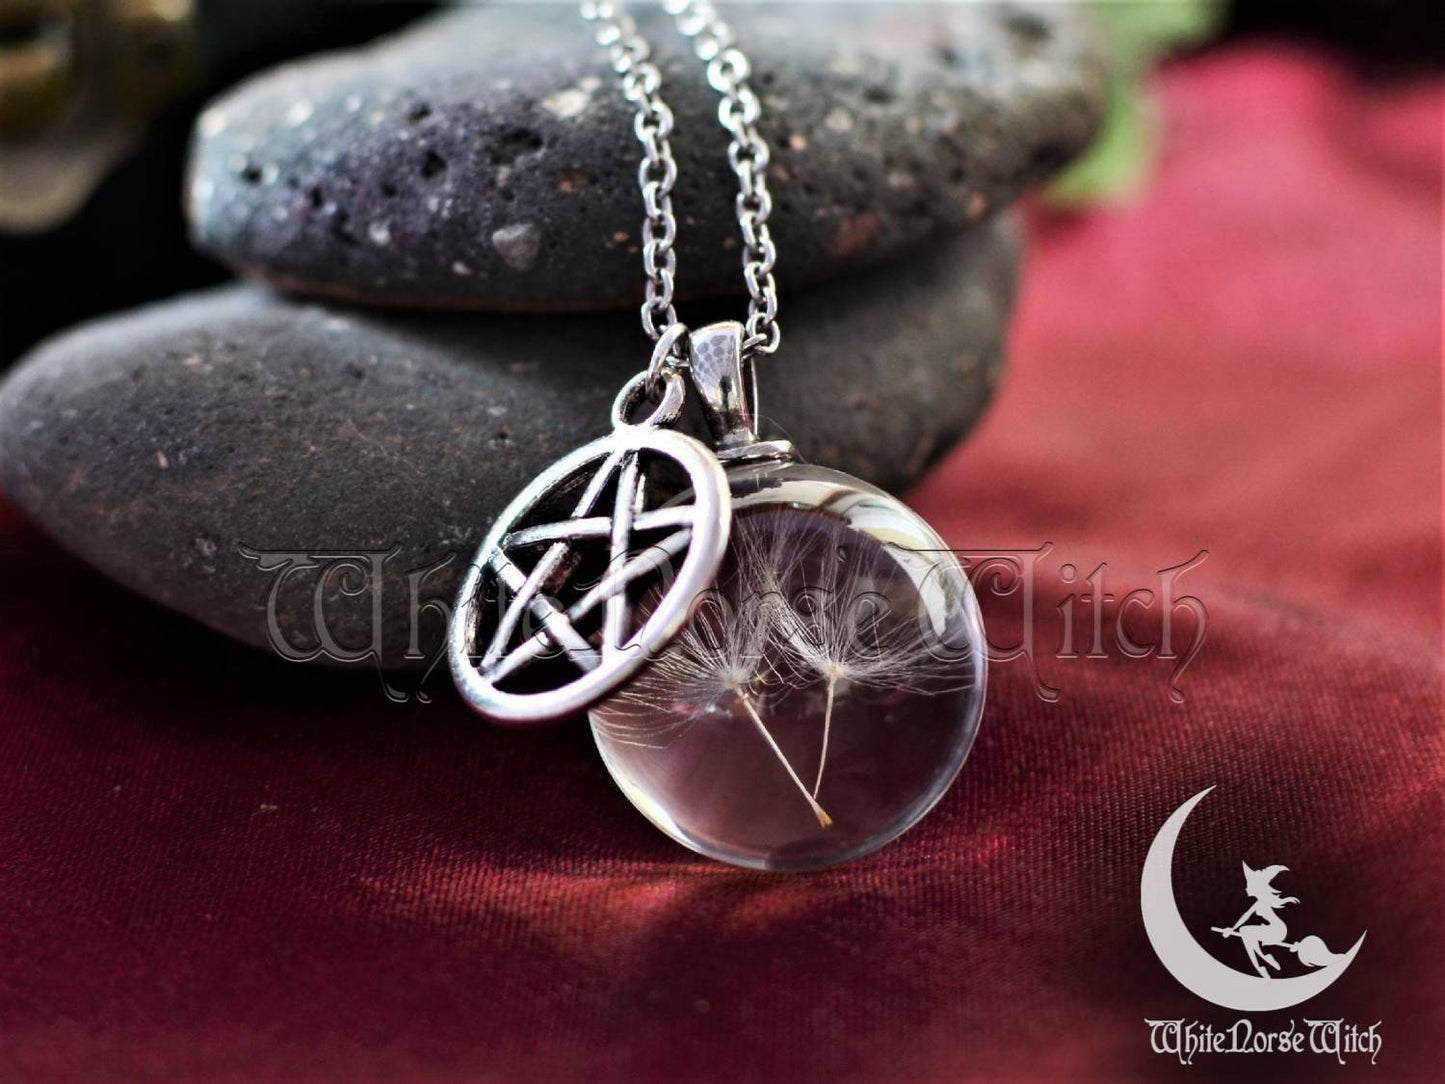 dandelion necklace glass wish pendant wicca jewelry pentagram